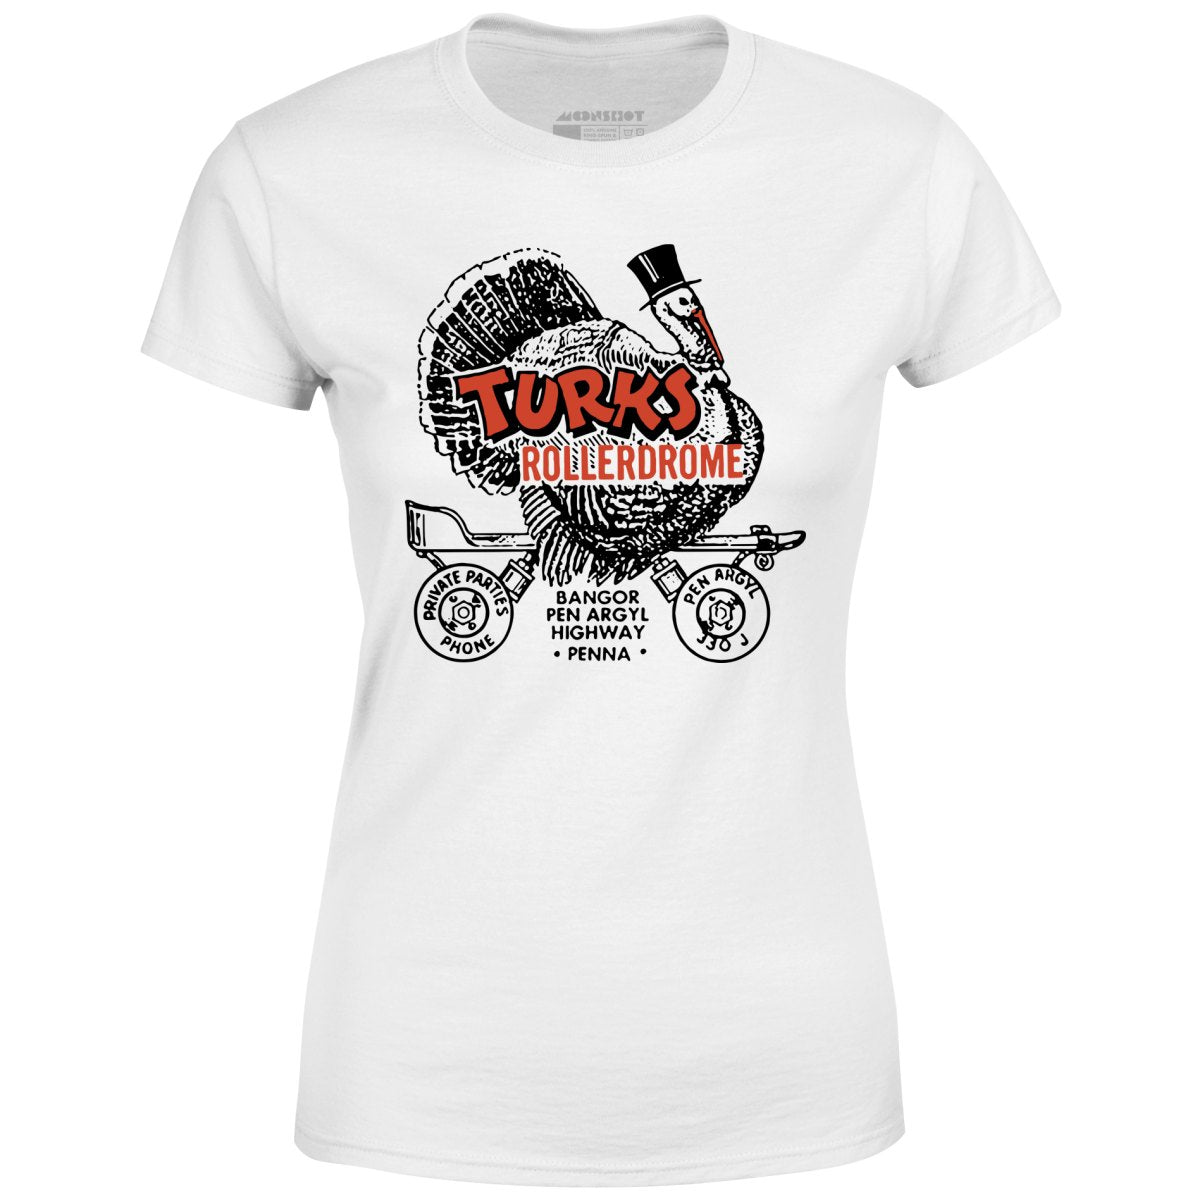 Turks Rollerdrome - Pen Argyl, PA - Vintage Roller Rink - Women's T-Shirt